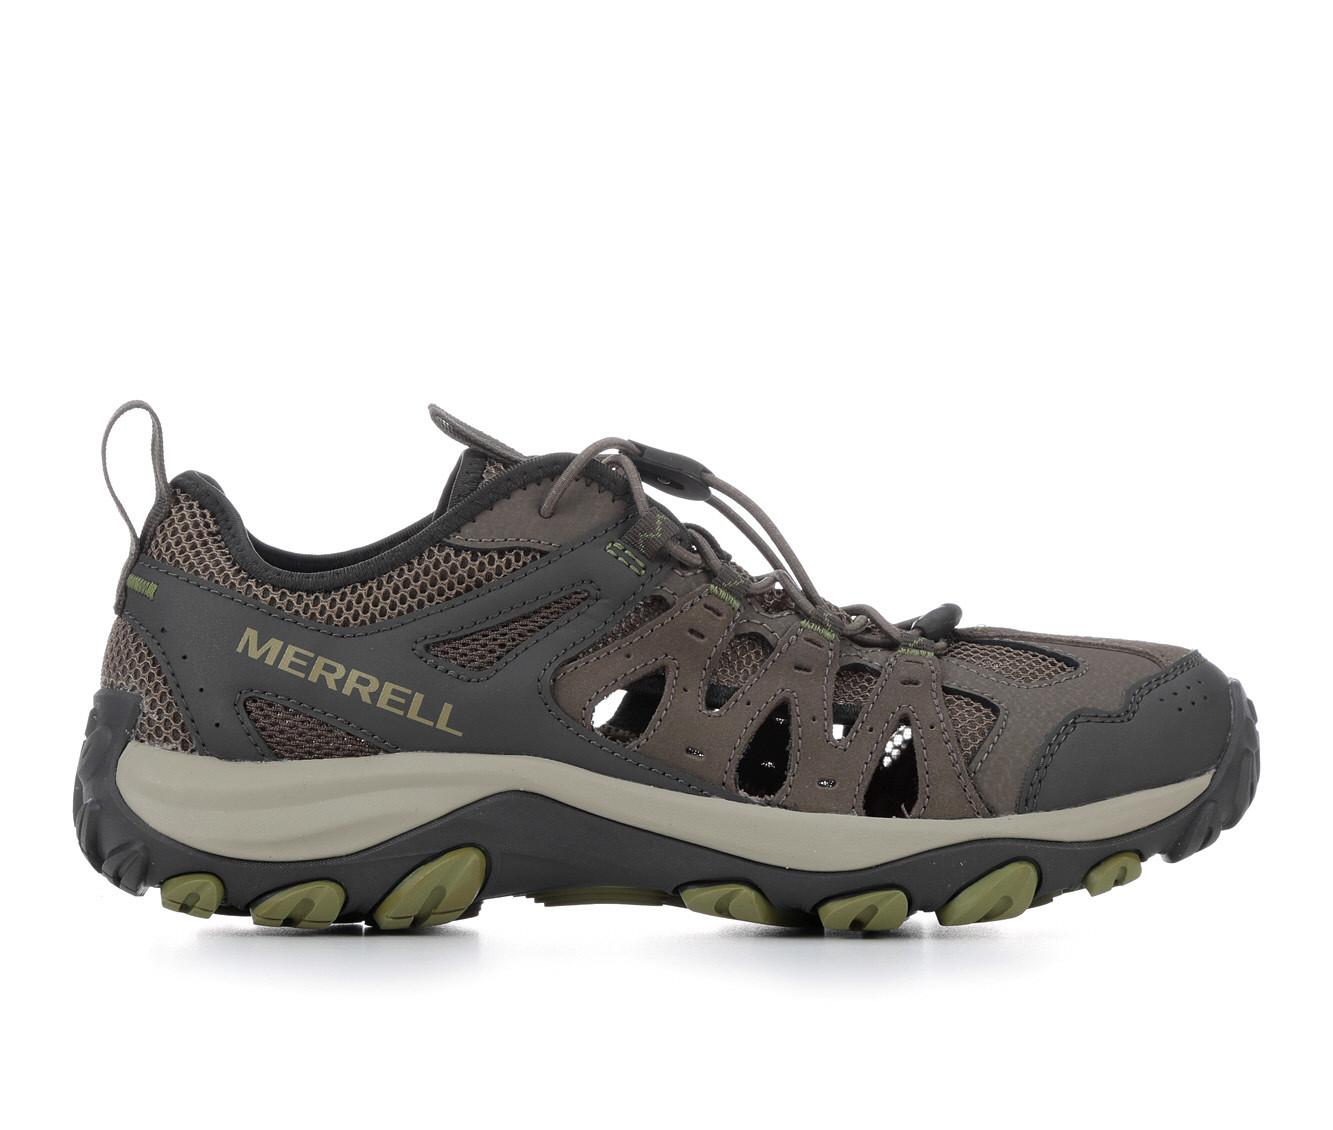 Men's Merrell Accentor 3 Sieve Men's Hiking Boots